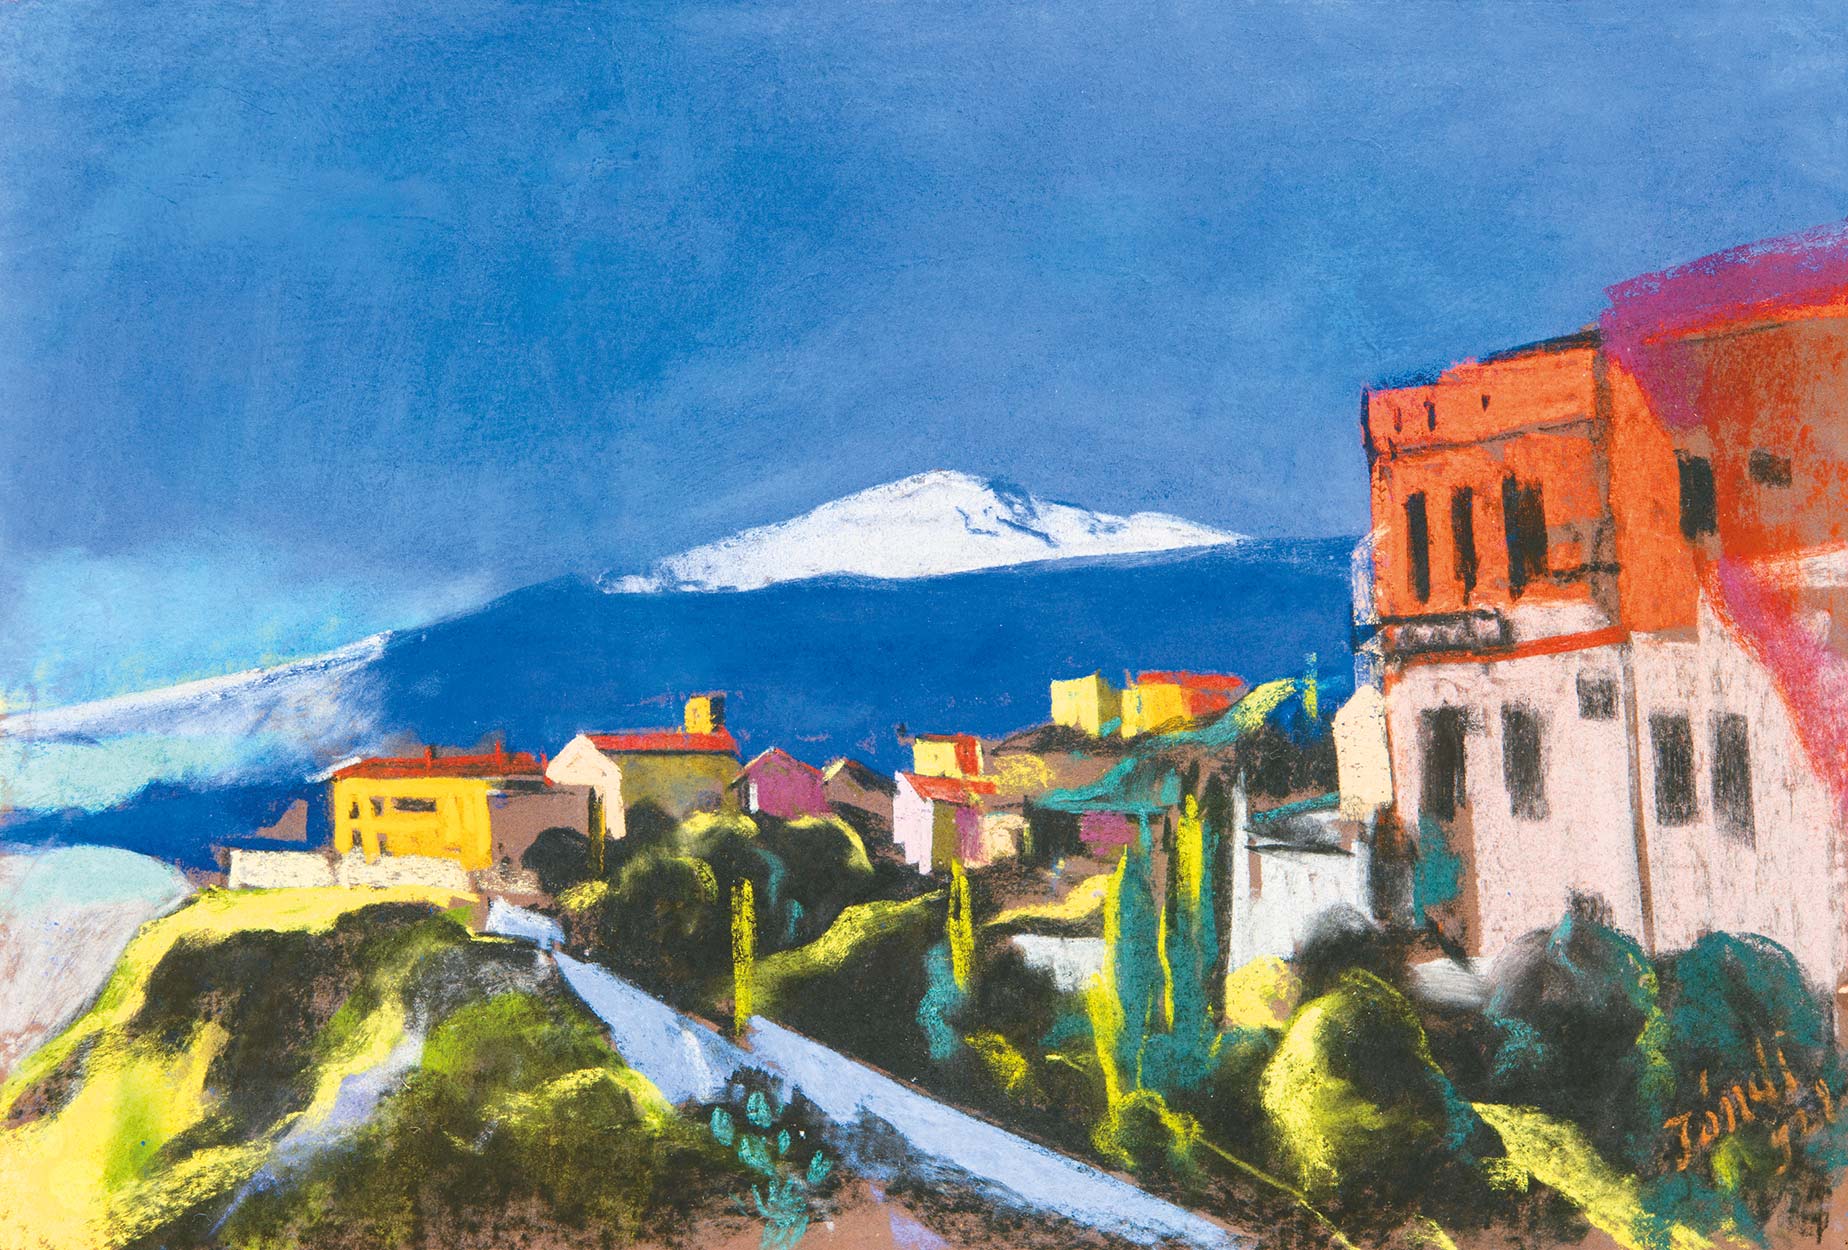 Jándi Dávid (1893-1944) A View of Naples and Vesuvius, 1928